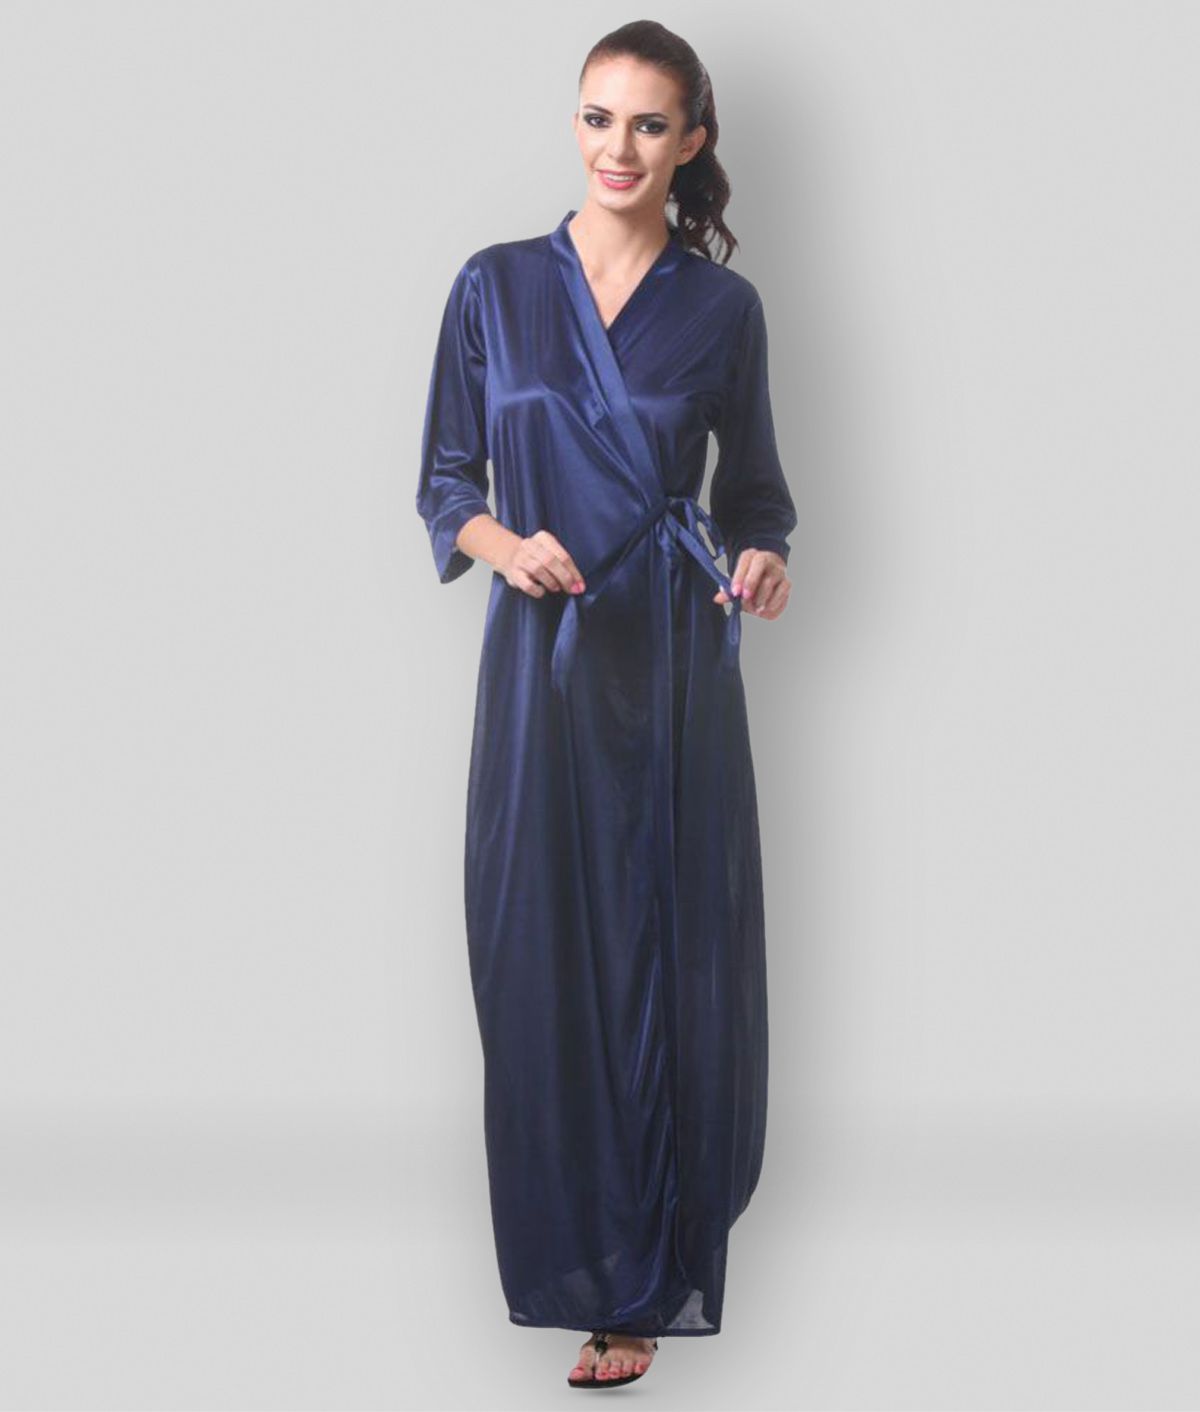 Affair - Navy Blue Satin Women's Nightwear Robes ( Pack of 1 )